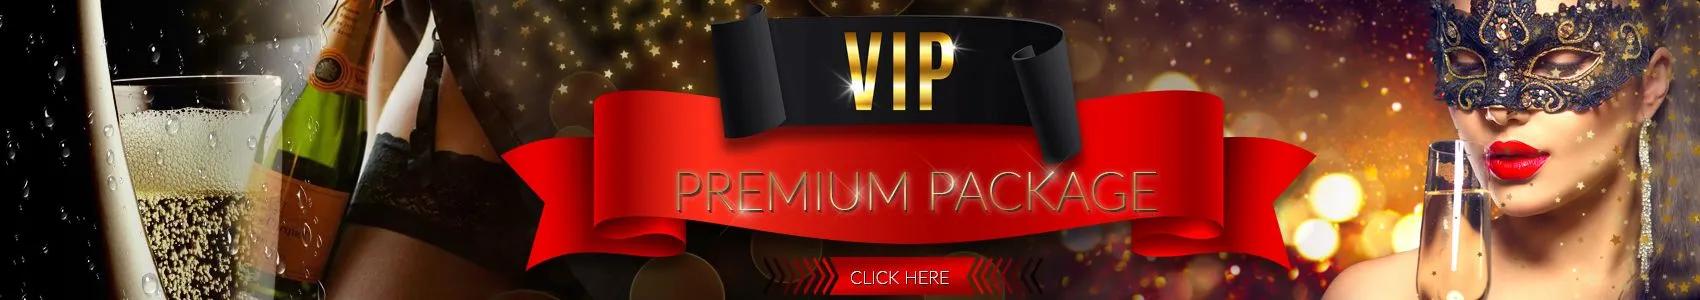 VIP Premium package